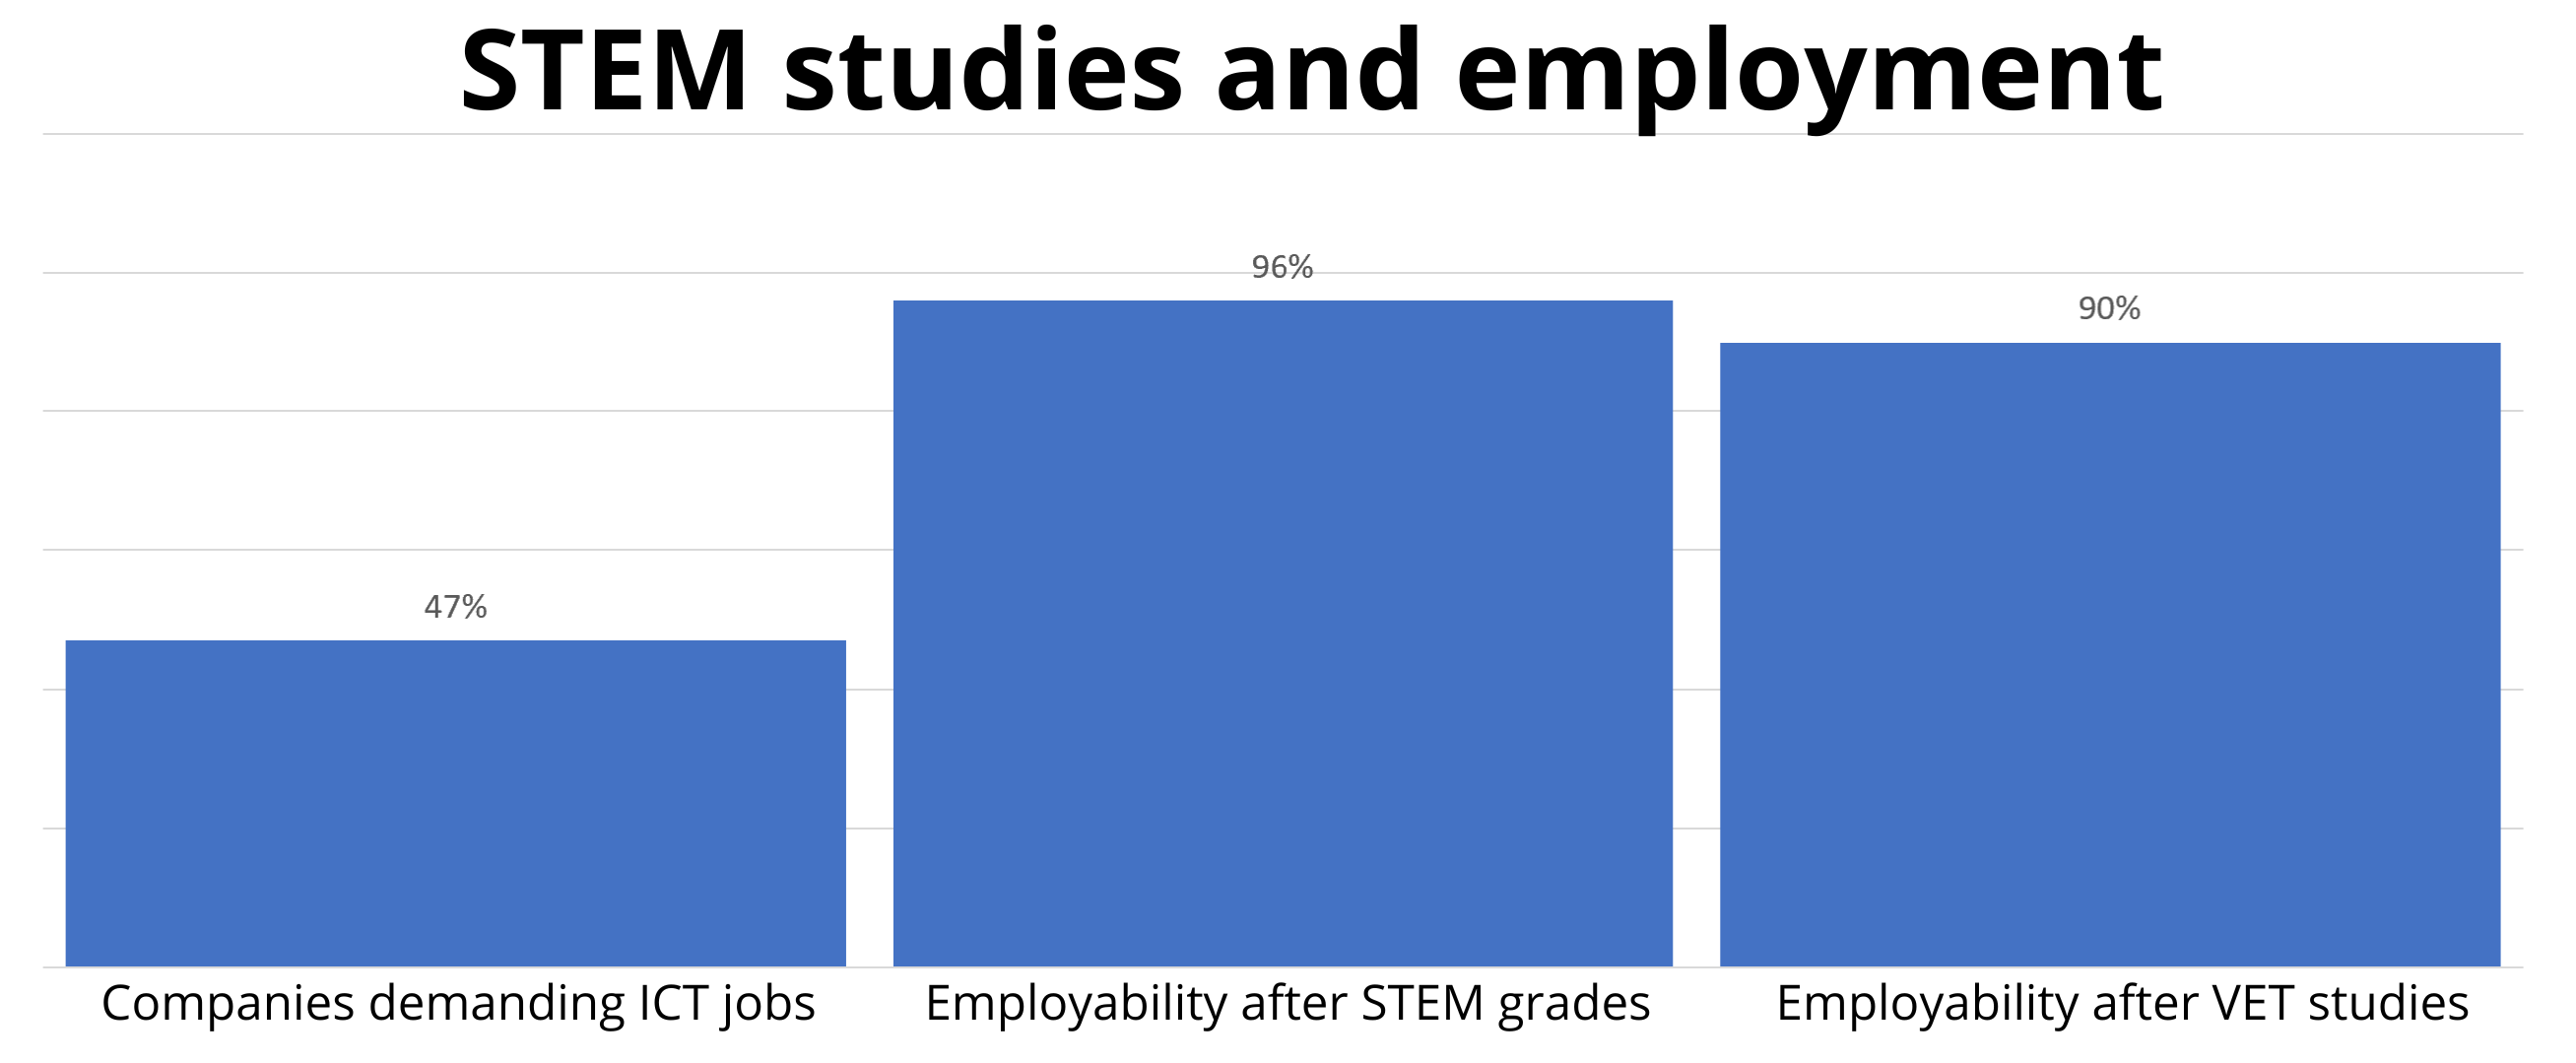 STEM employment